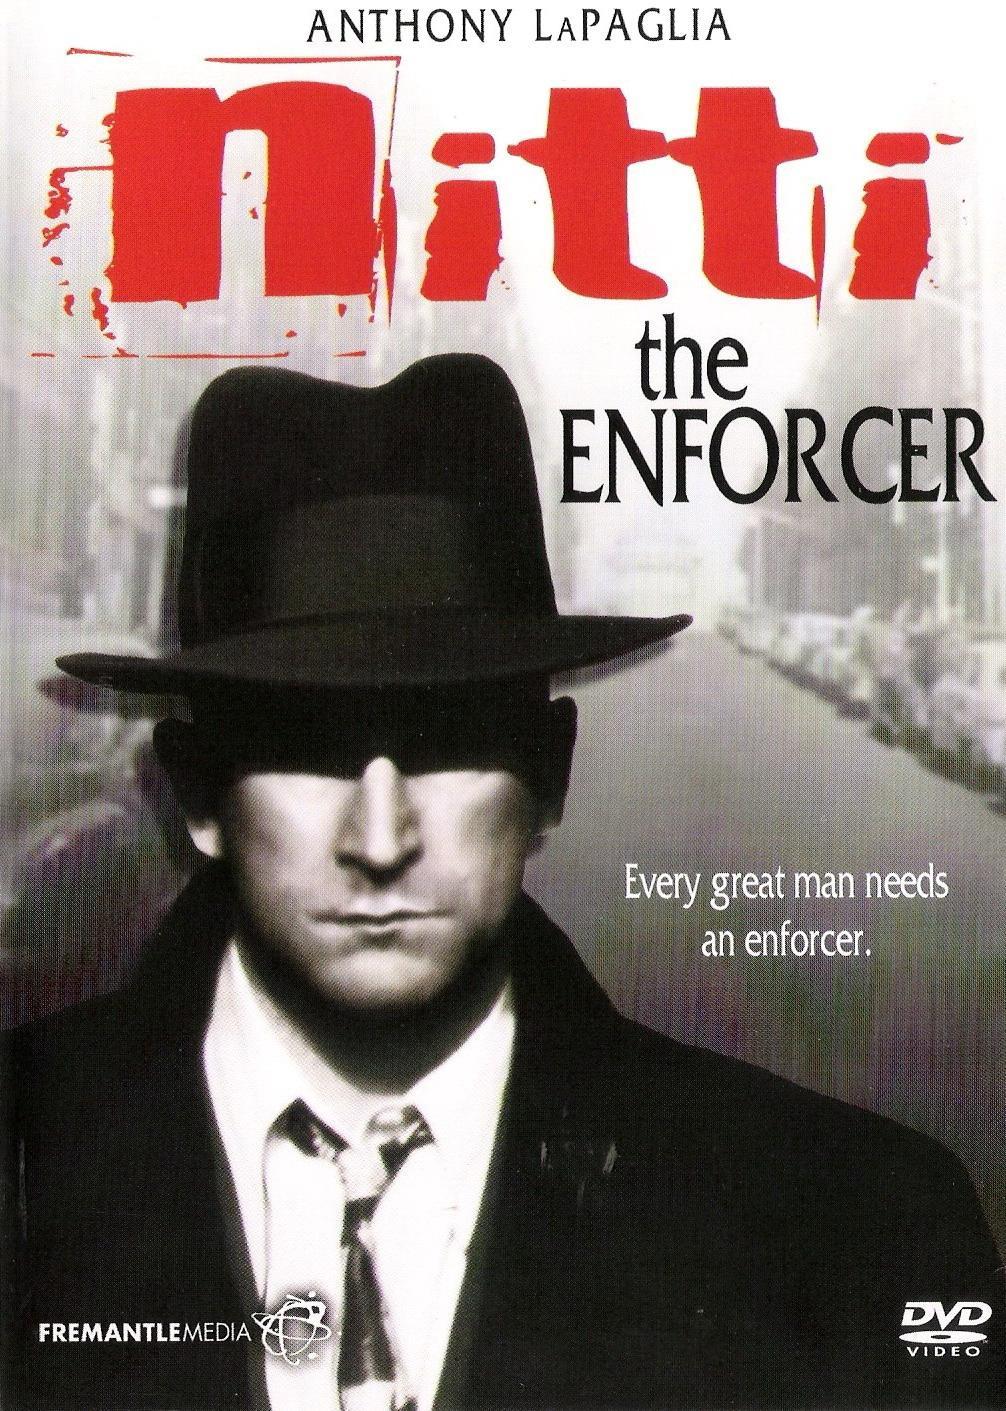 Постер фильма Нитти-гангстер | Frank Nitti: The Enforcer